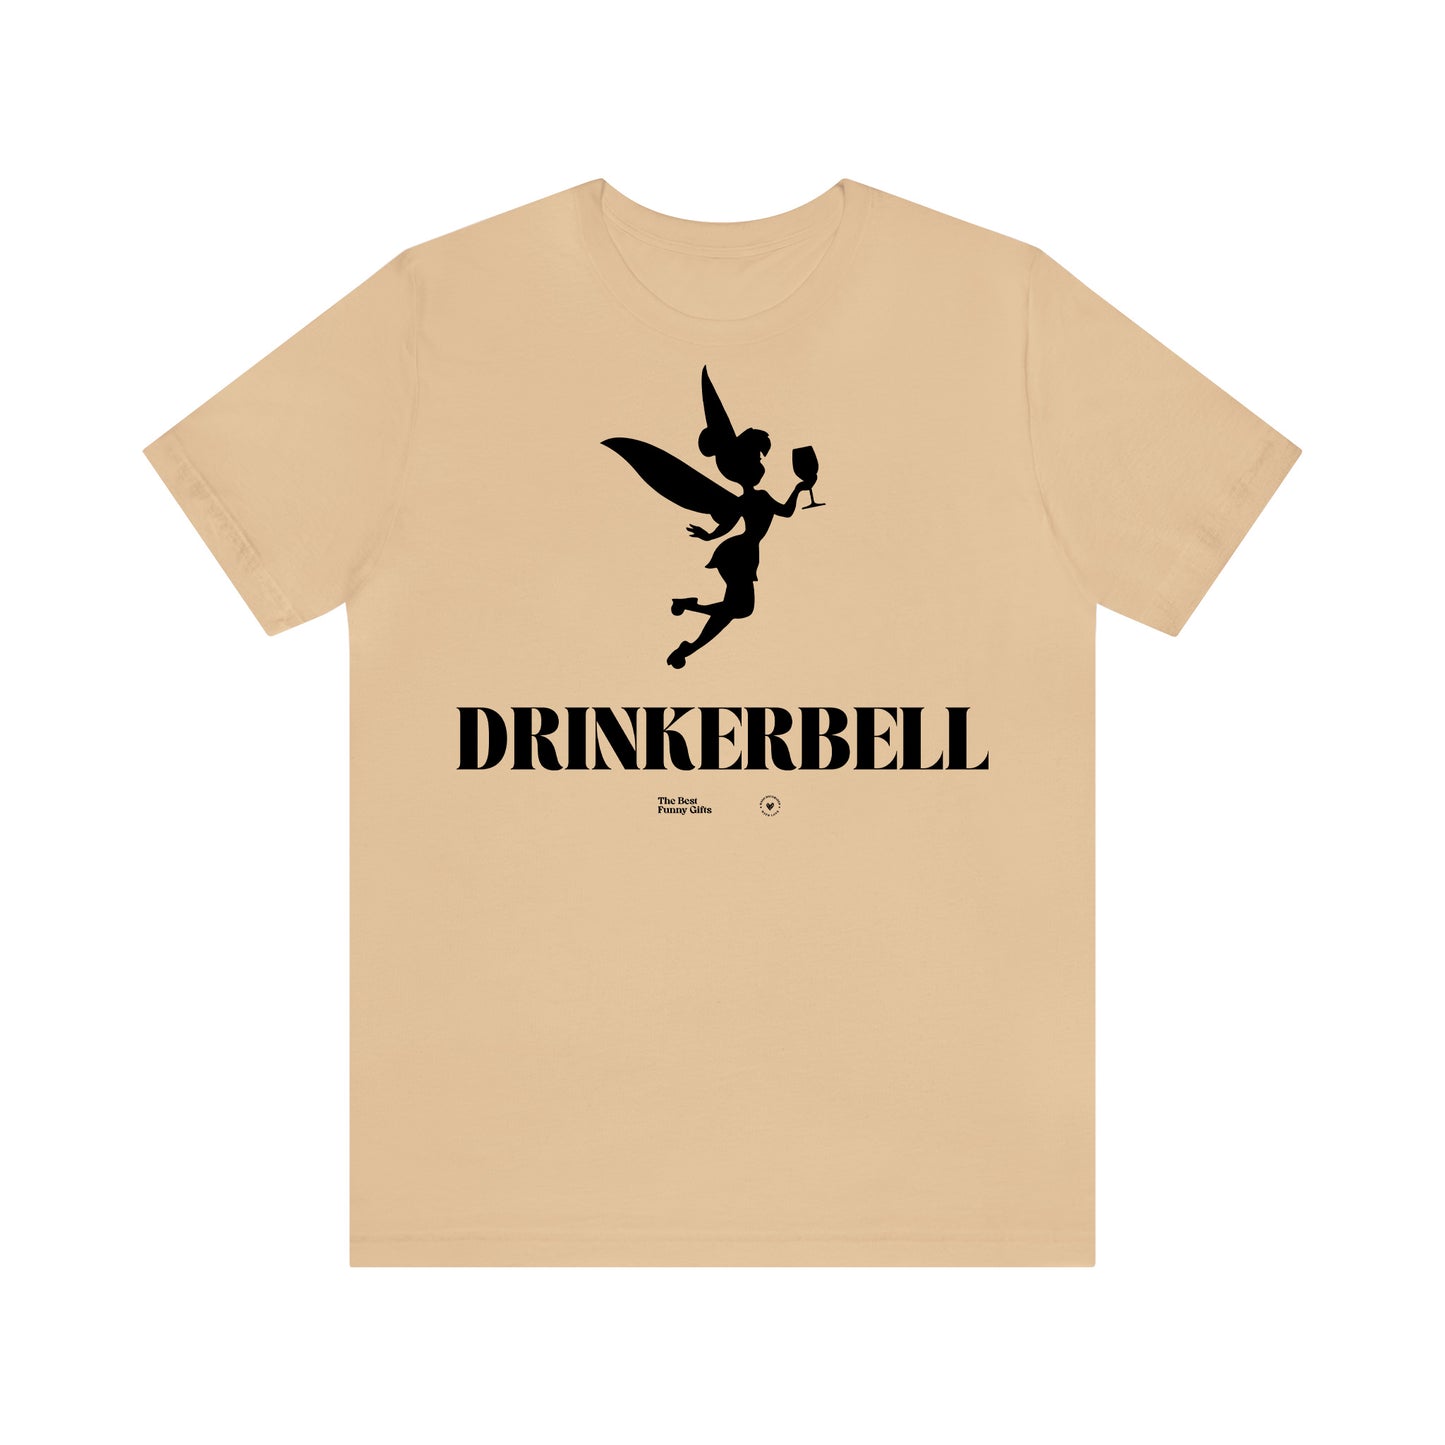 Funny Shirts for Women - Drinkerbell - Women’s T Shirts